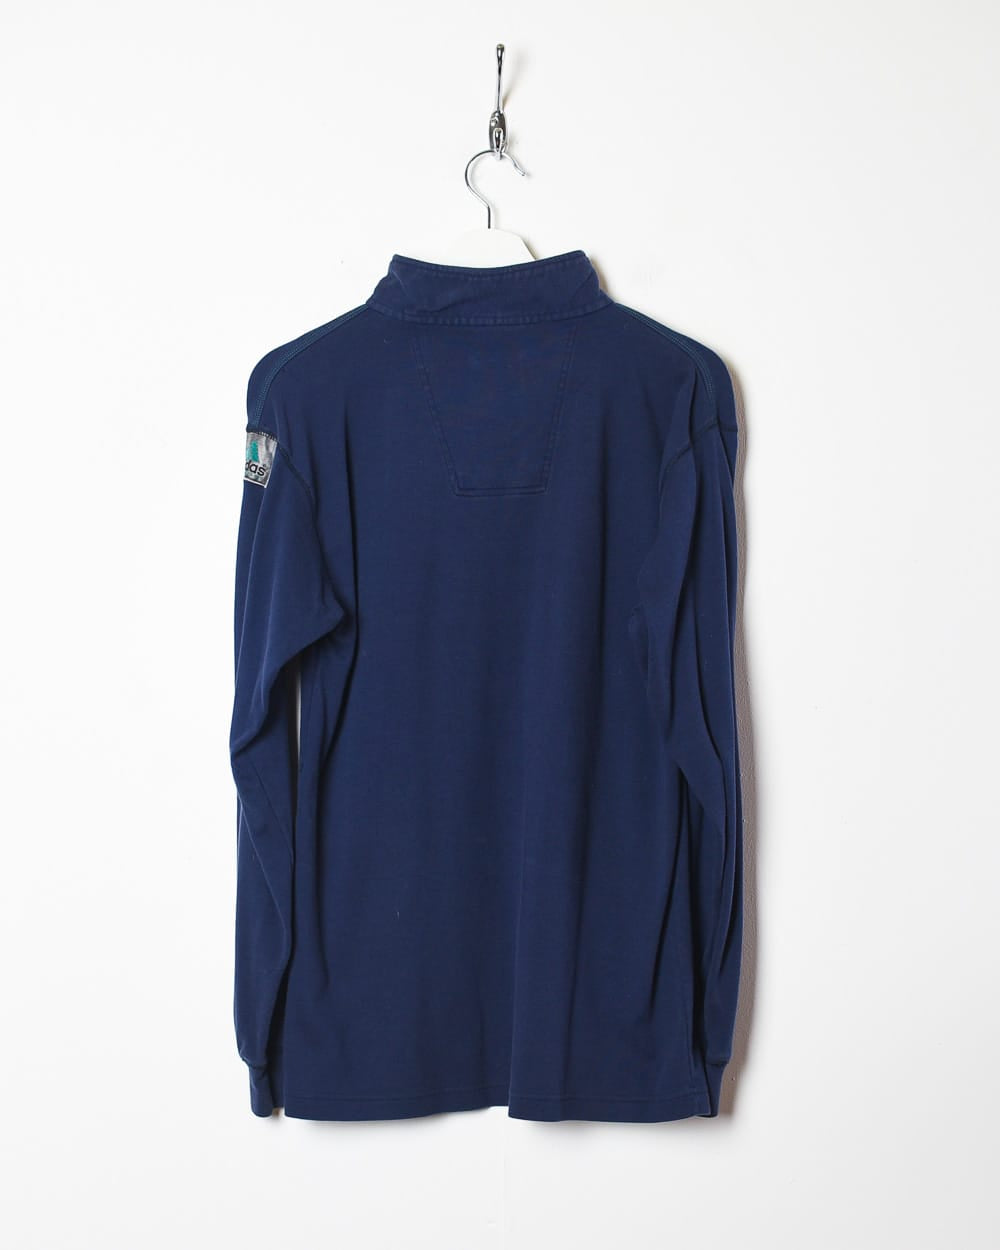 Navy Adidas Equipment 1/4 Zip Sweatshirt - Medium